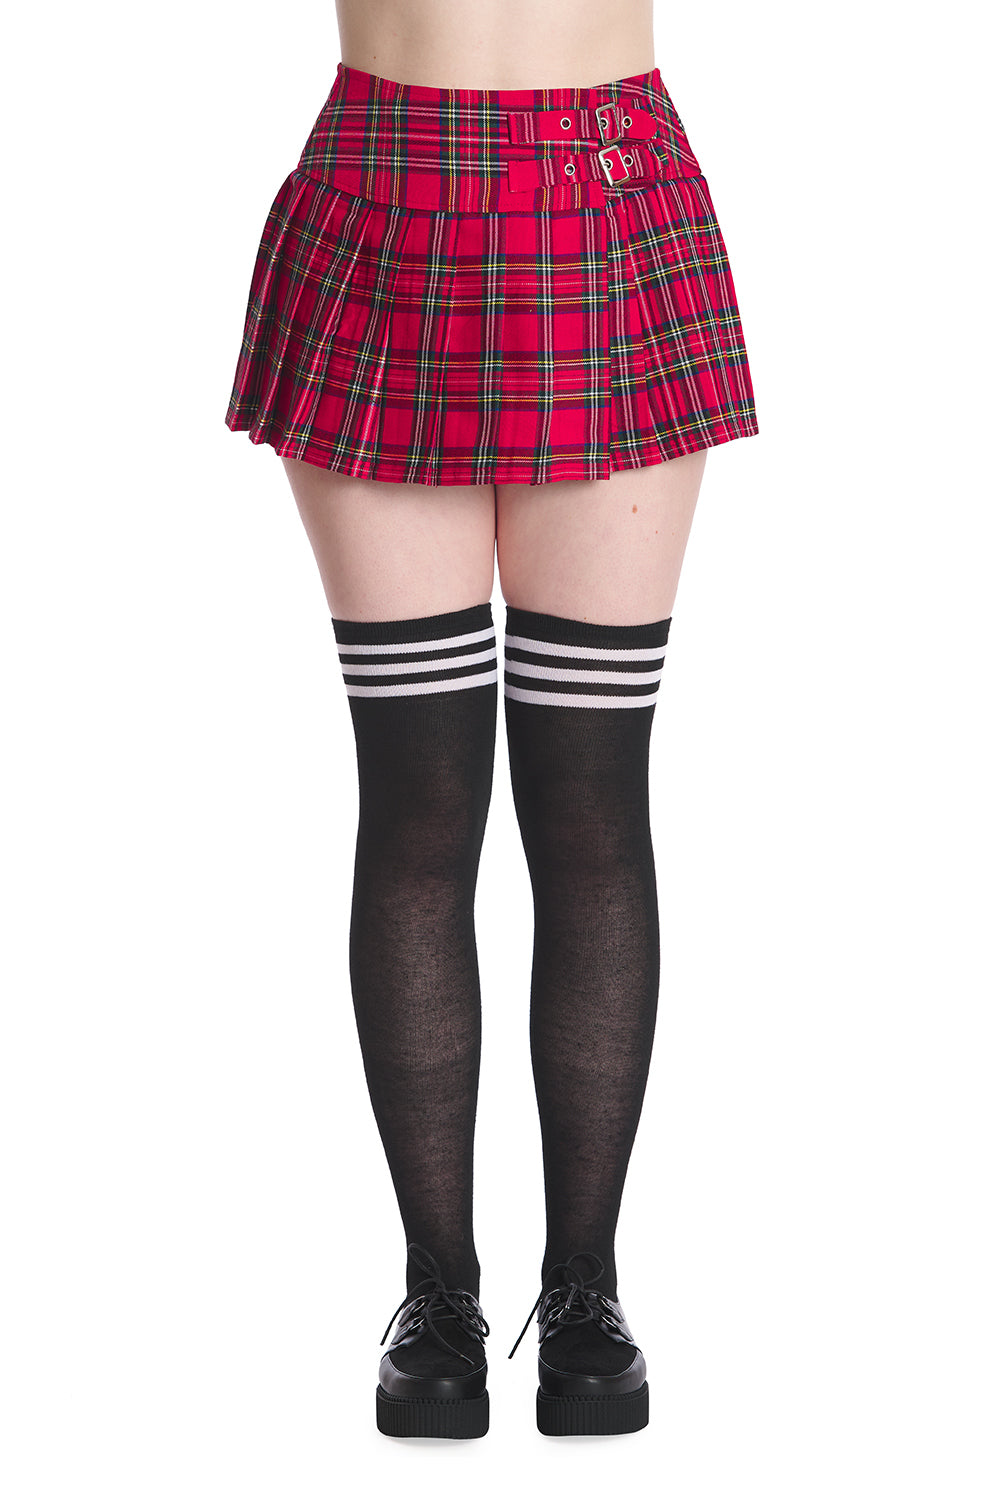 Red Tartan Plaid Punk Rock Gothic Mini Skirt Skirt